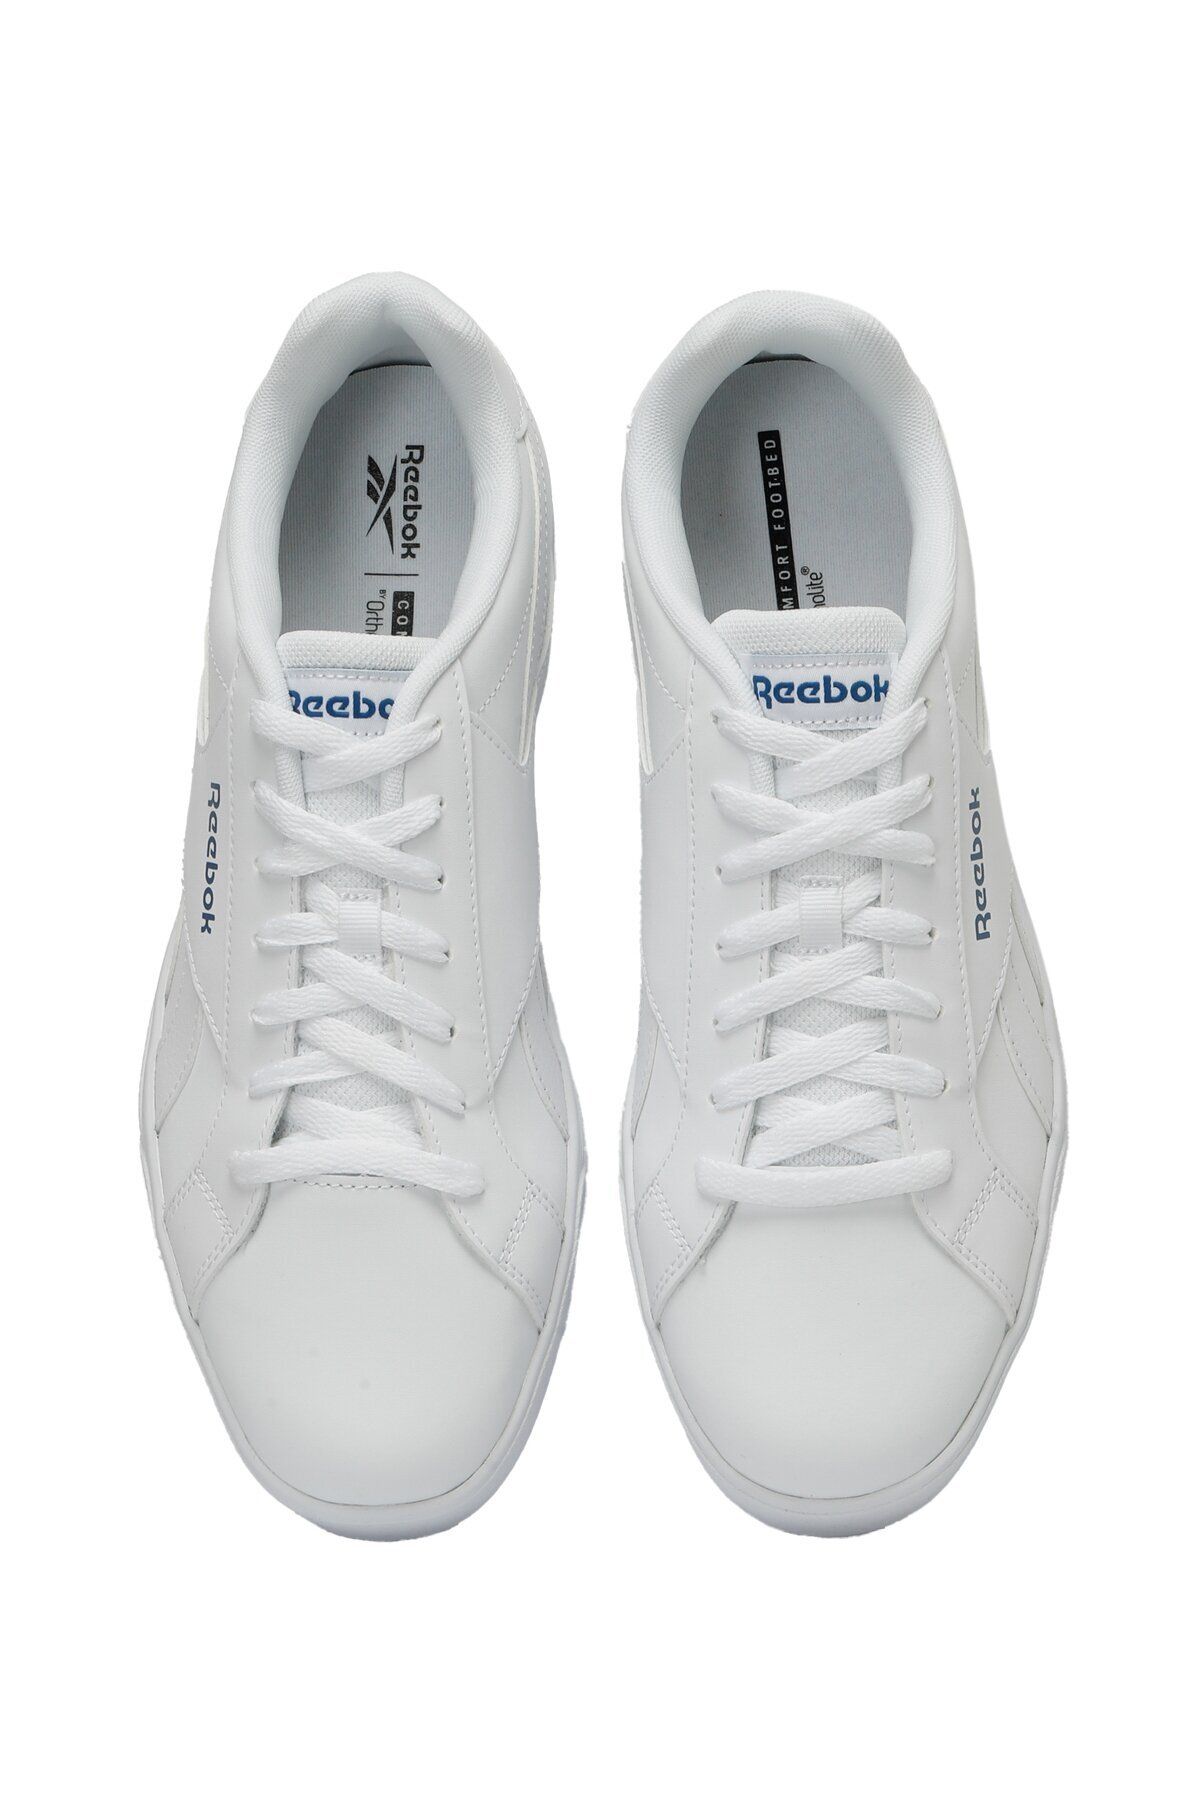 Reebok Royal Complete3low سفید یونیسکس کفش ورزشی